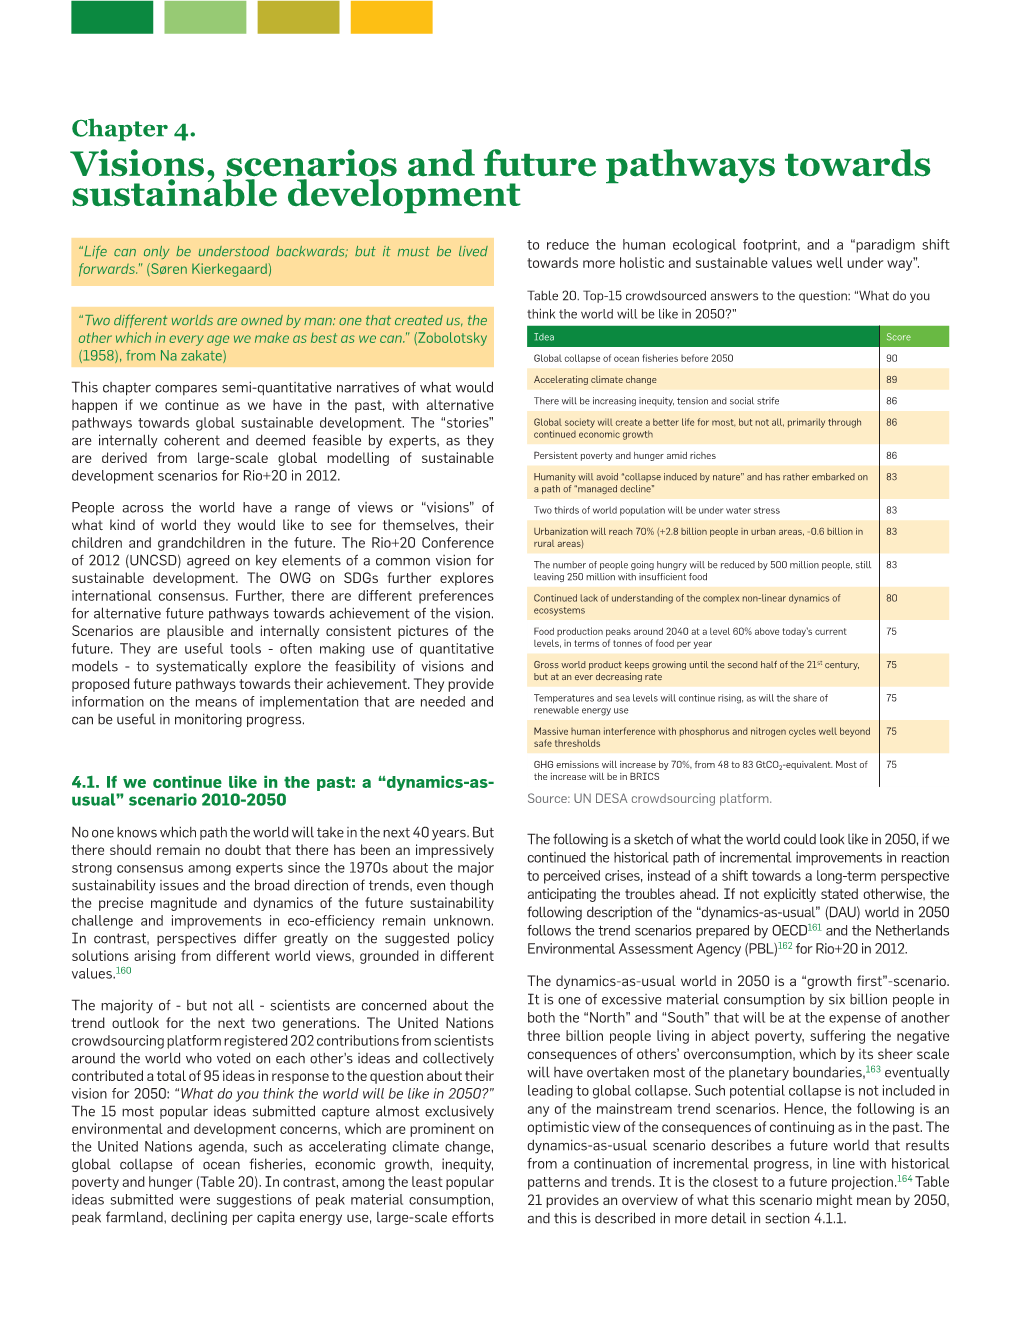 Visions, Scenarios and Future Pathways Towards Sustainable Development